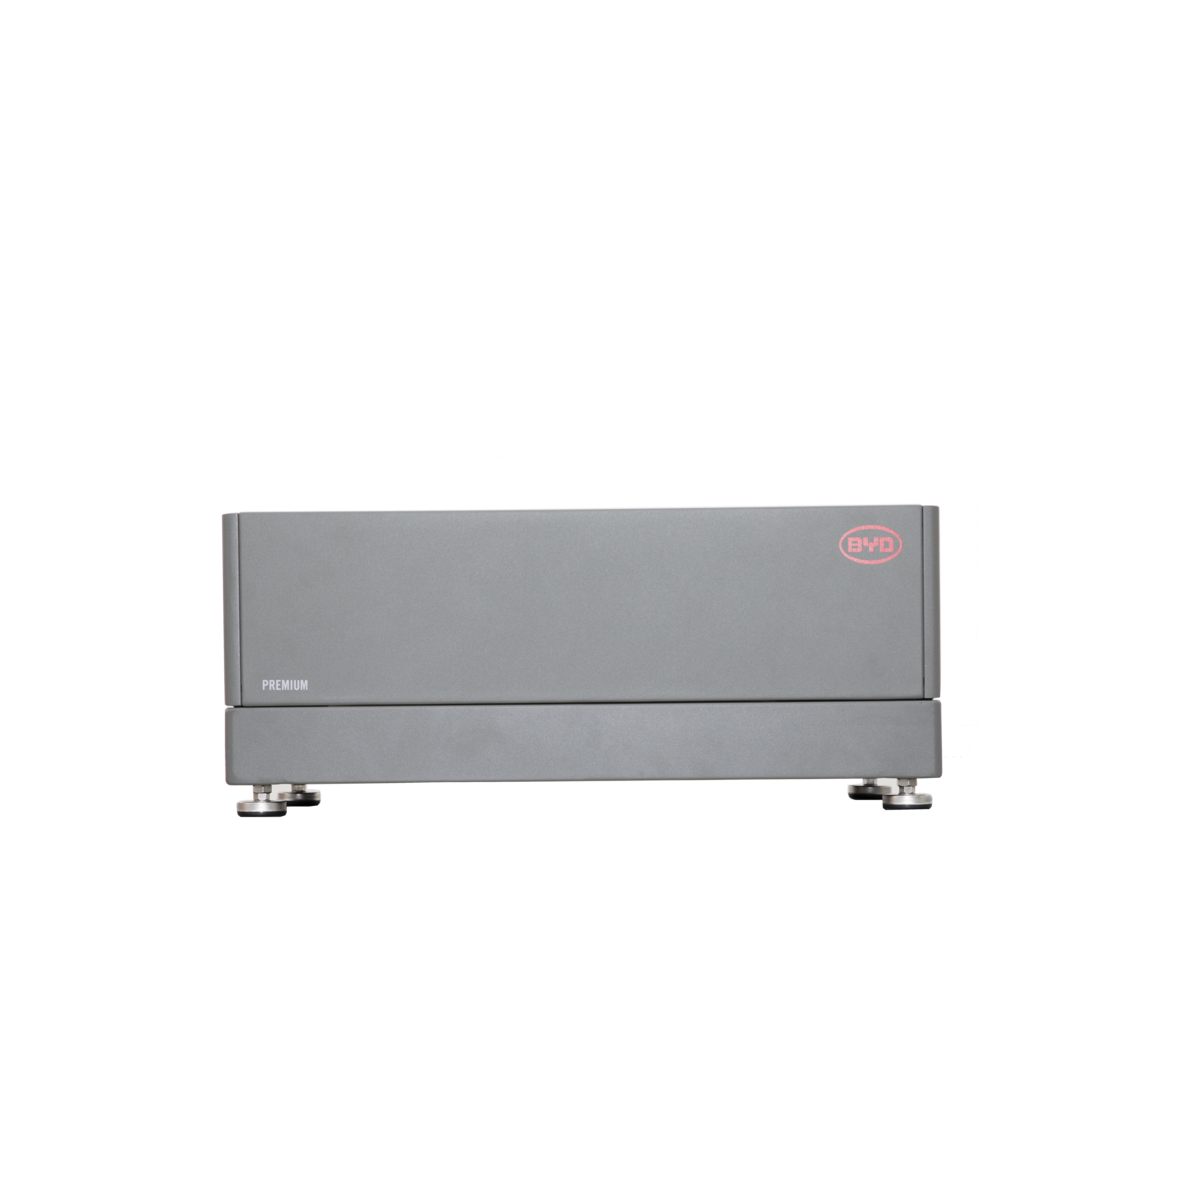 BYD Premium LVS Battery Box Solarspeicher - Fairdeal